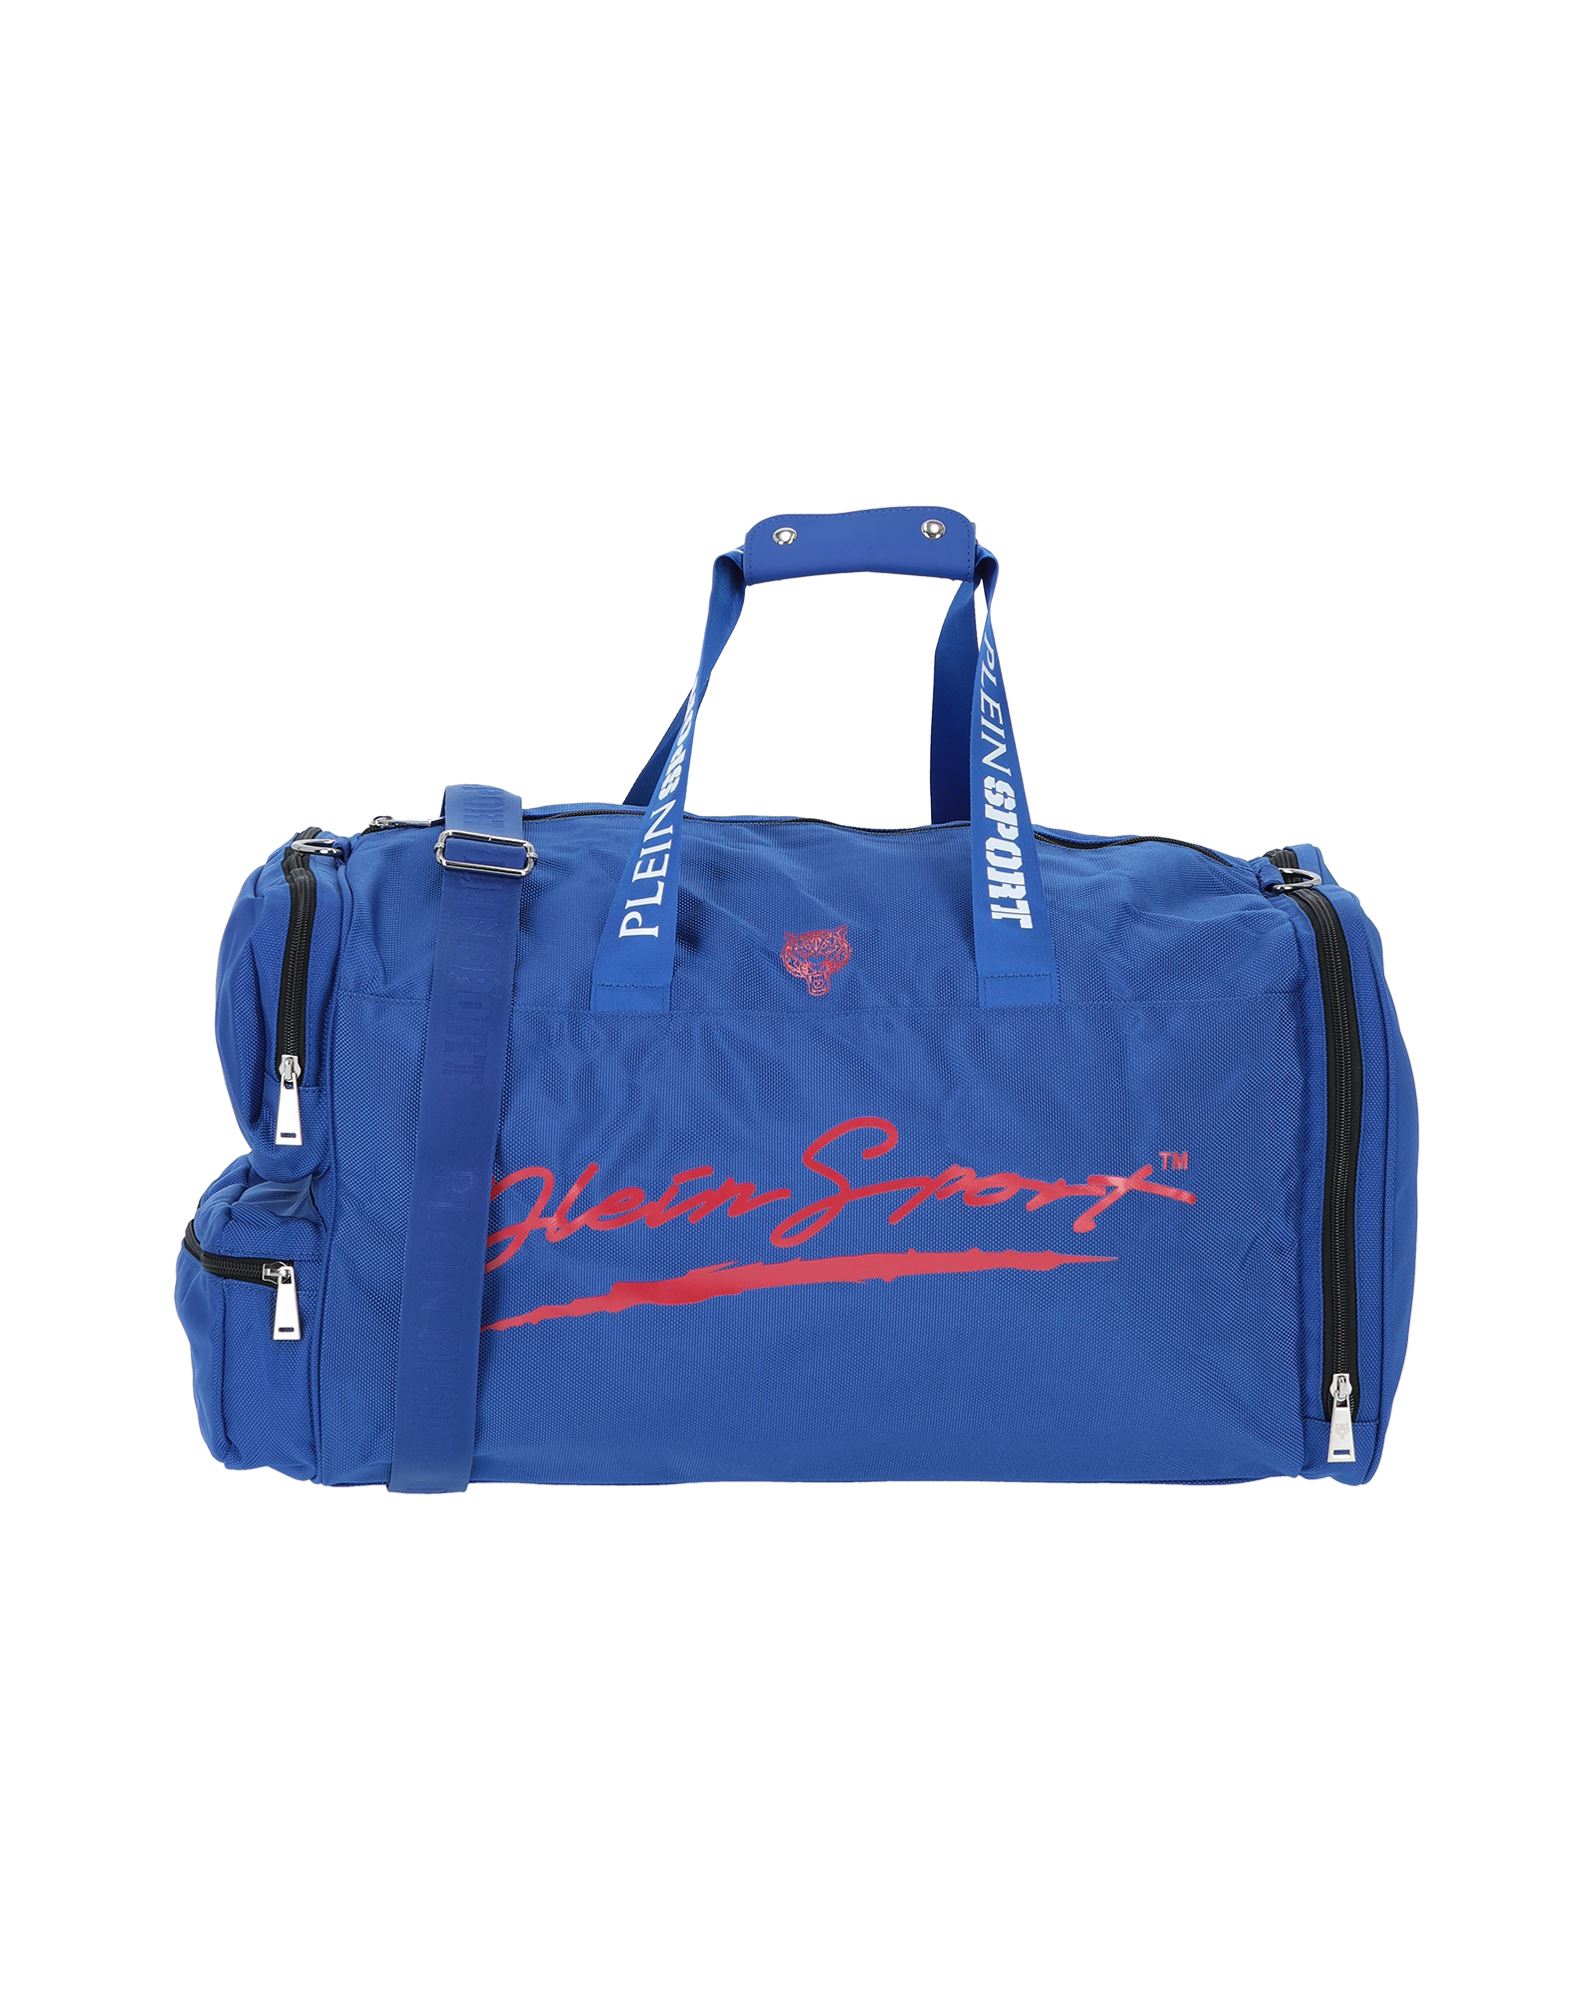 Plein Sport Duffel Bags In Bright Blue